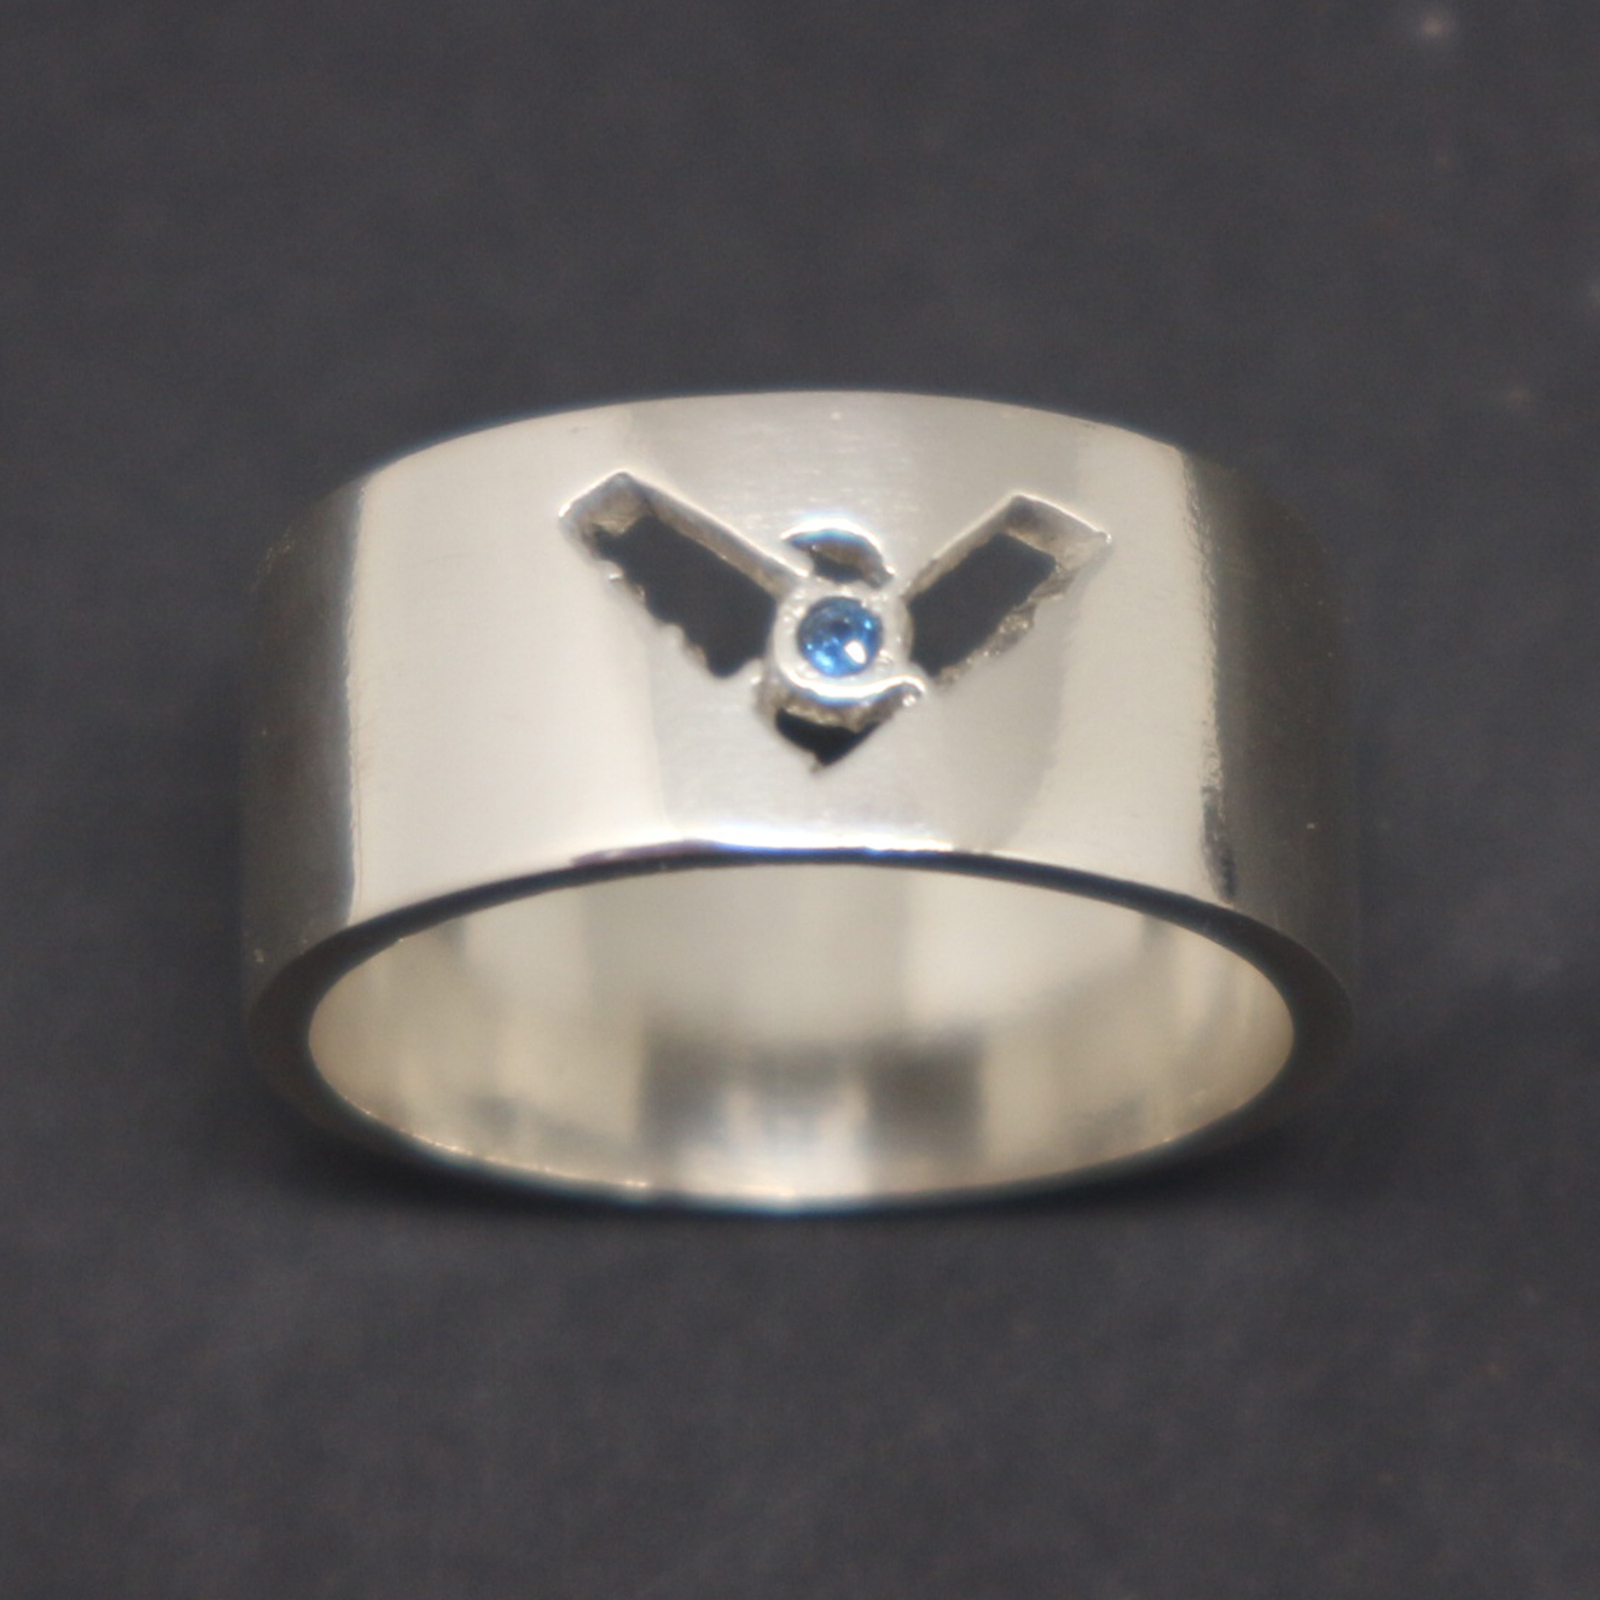 Handmade 925 Sterling Silver Nightwing Ring Choker - Gift for Geek, Nerd